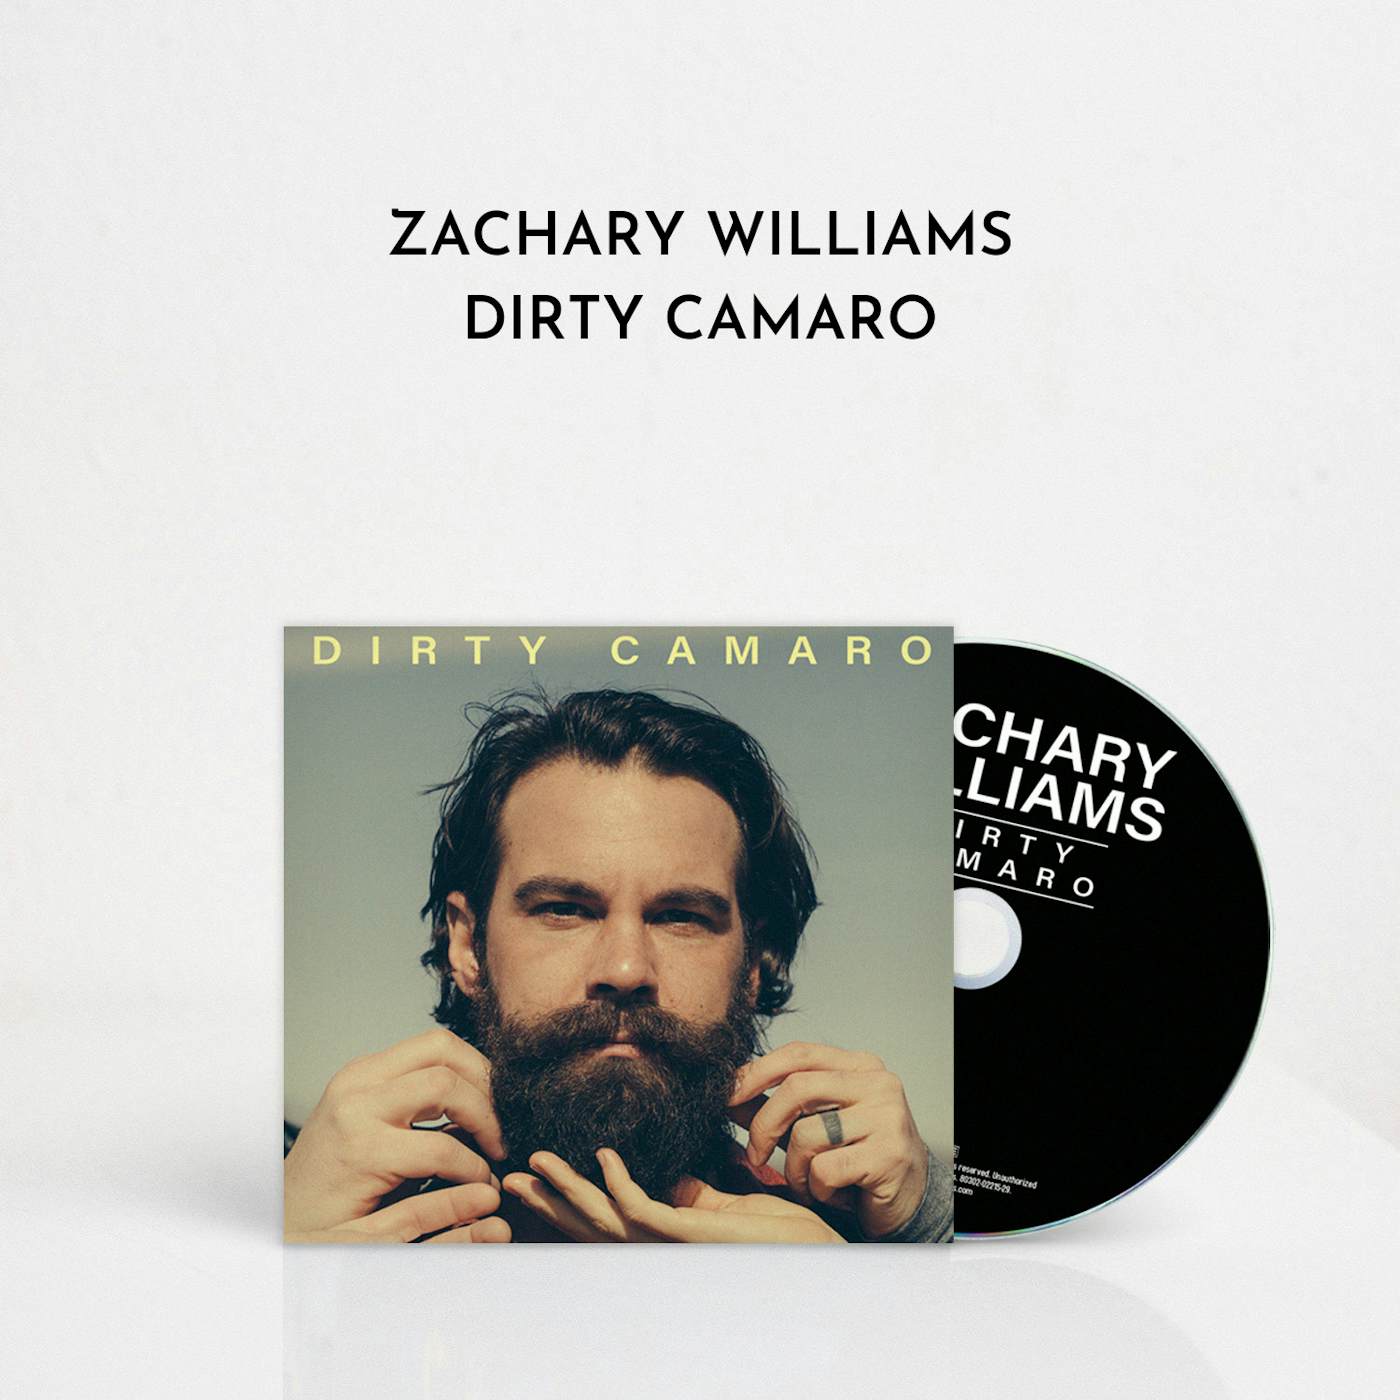 Zachary Williams Dirty Camaro (CD)